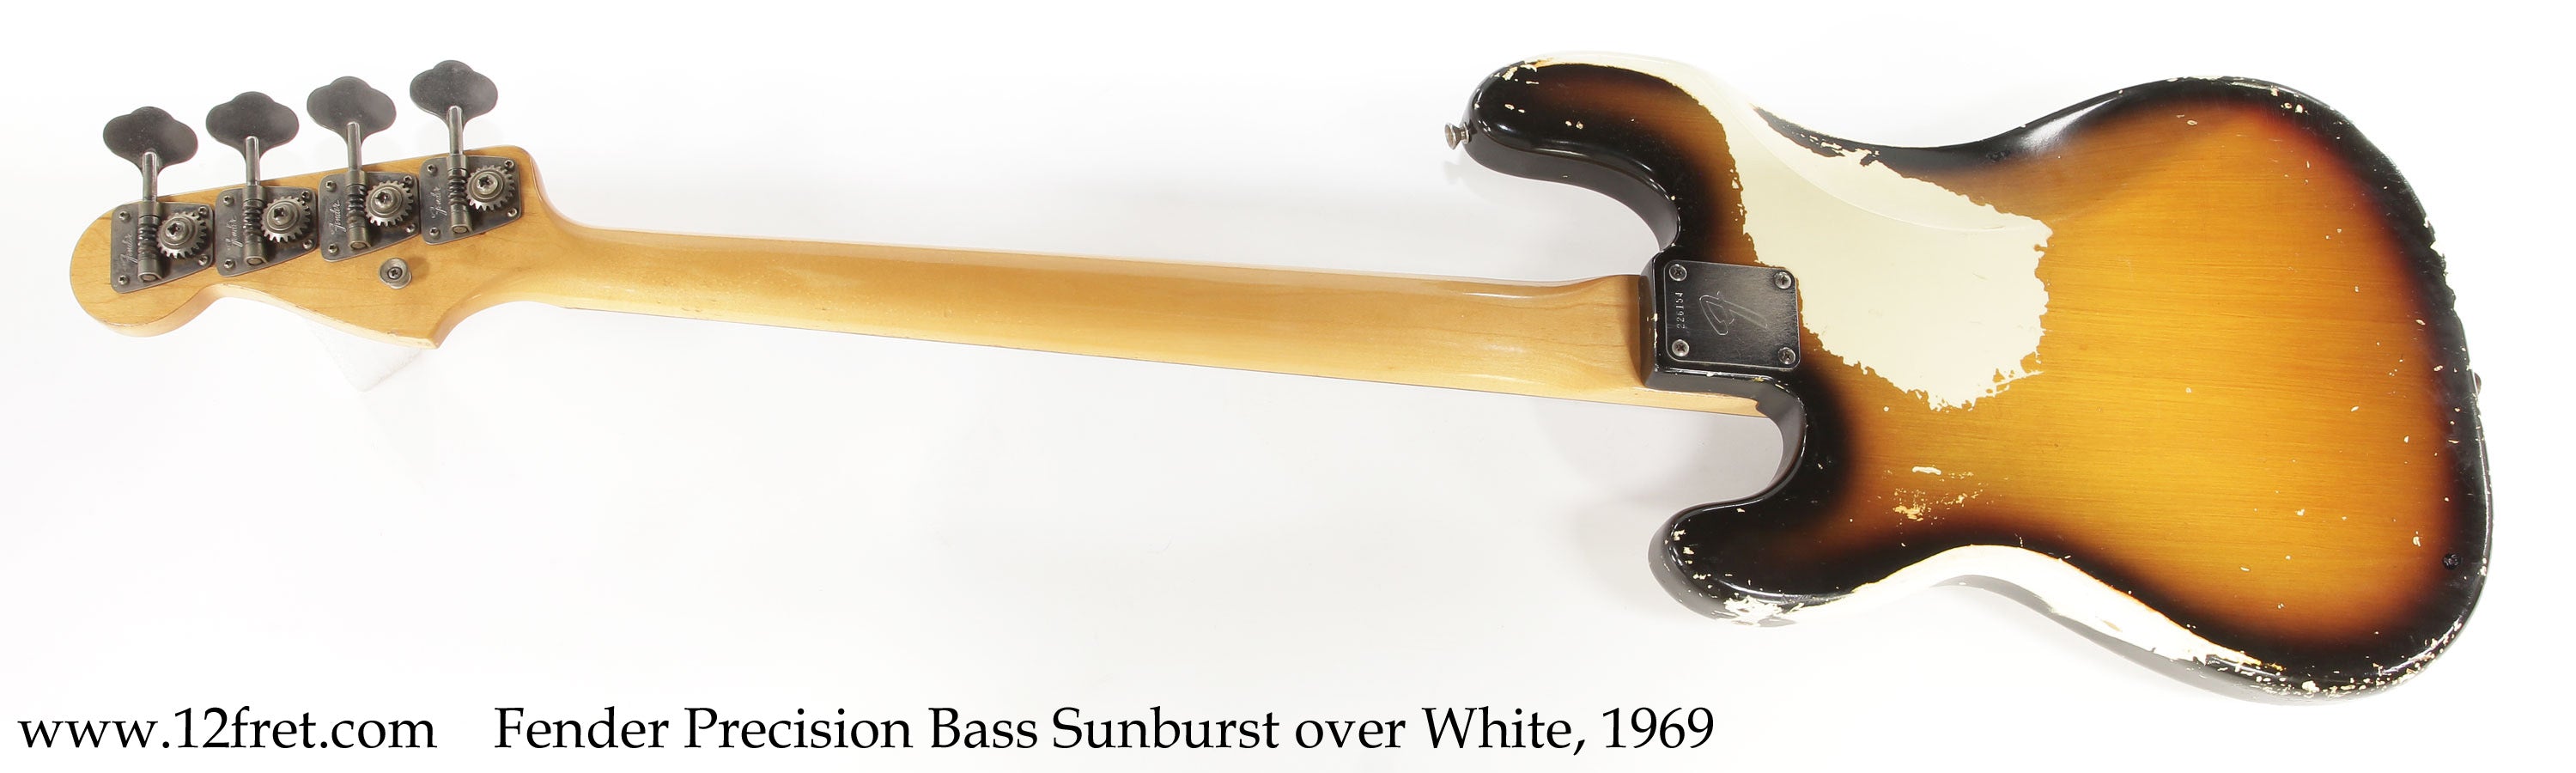 Fender Precision Bass Sunburst over White, 1969 - The Twelfth Fret